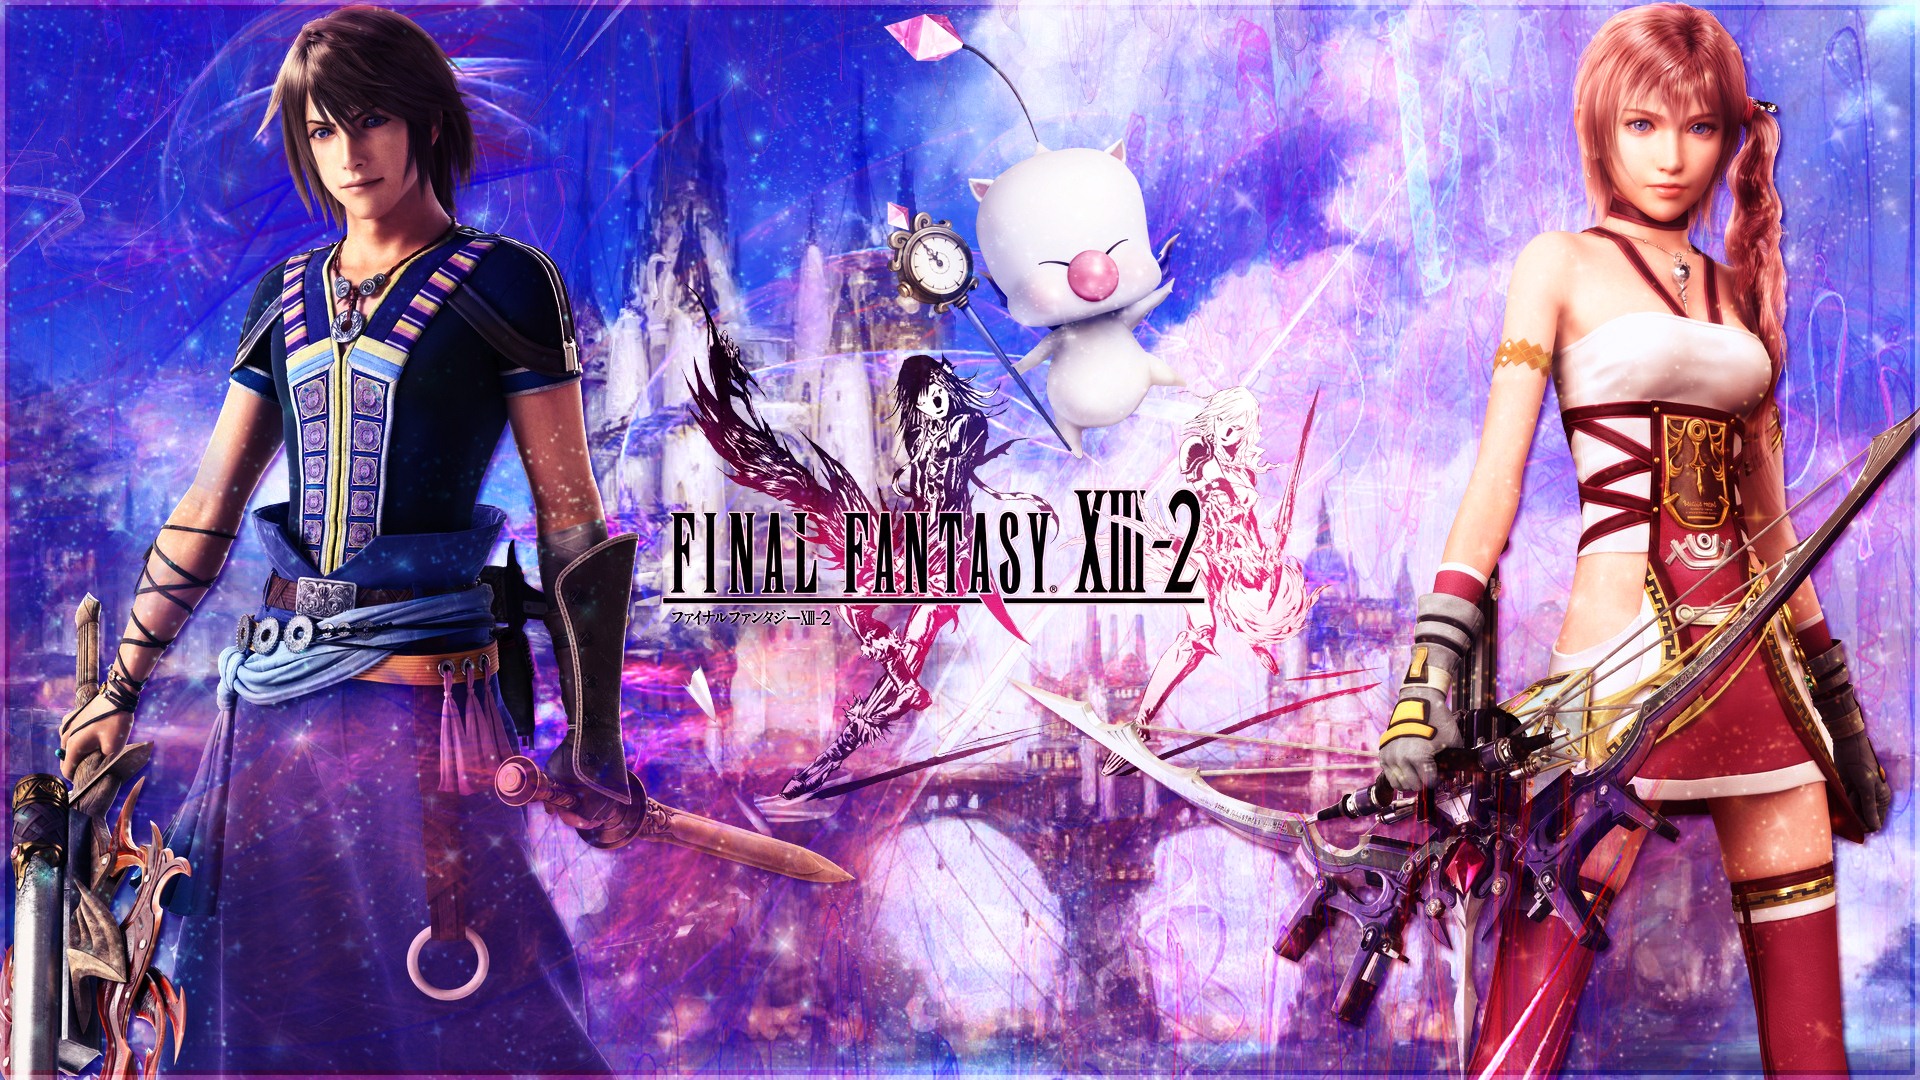 Final Fantasy XIII-2 HD wallpapers #10 - 1920x1080